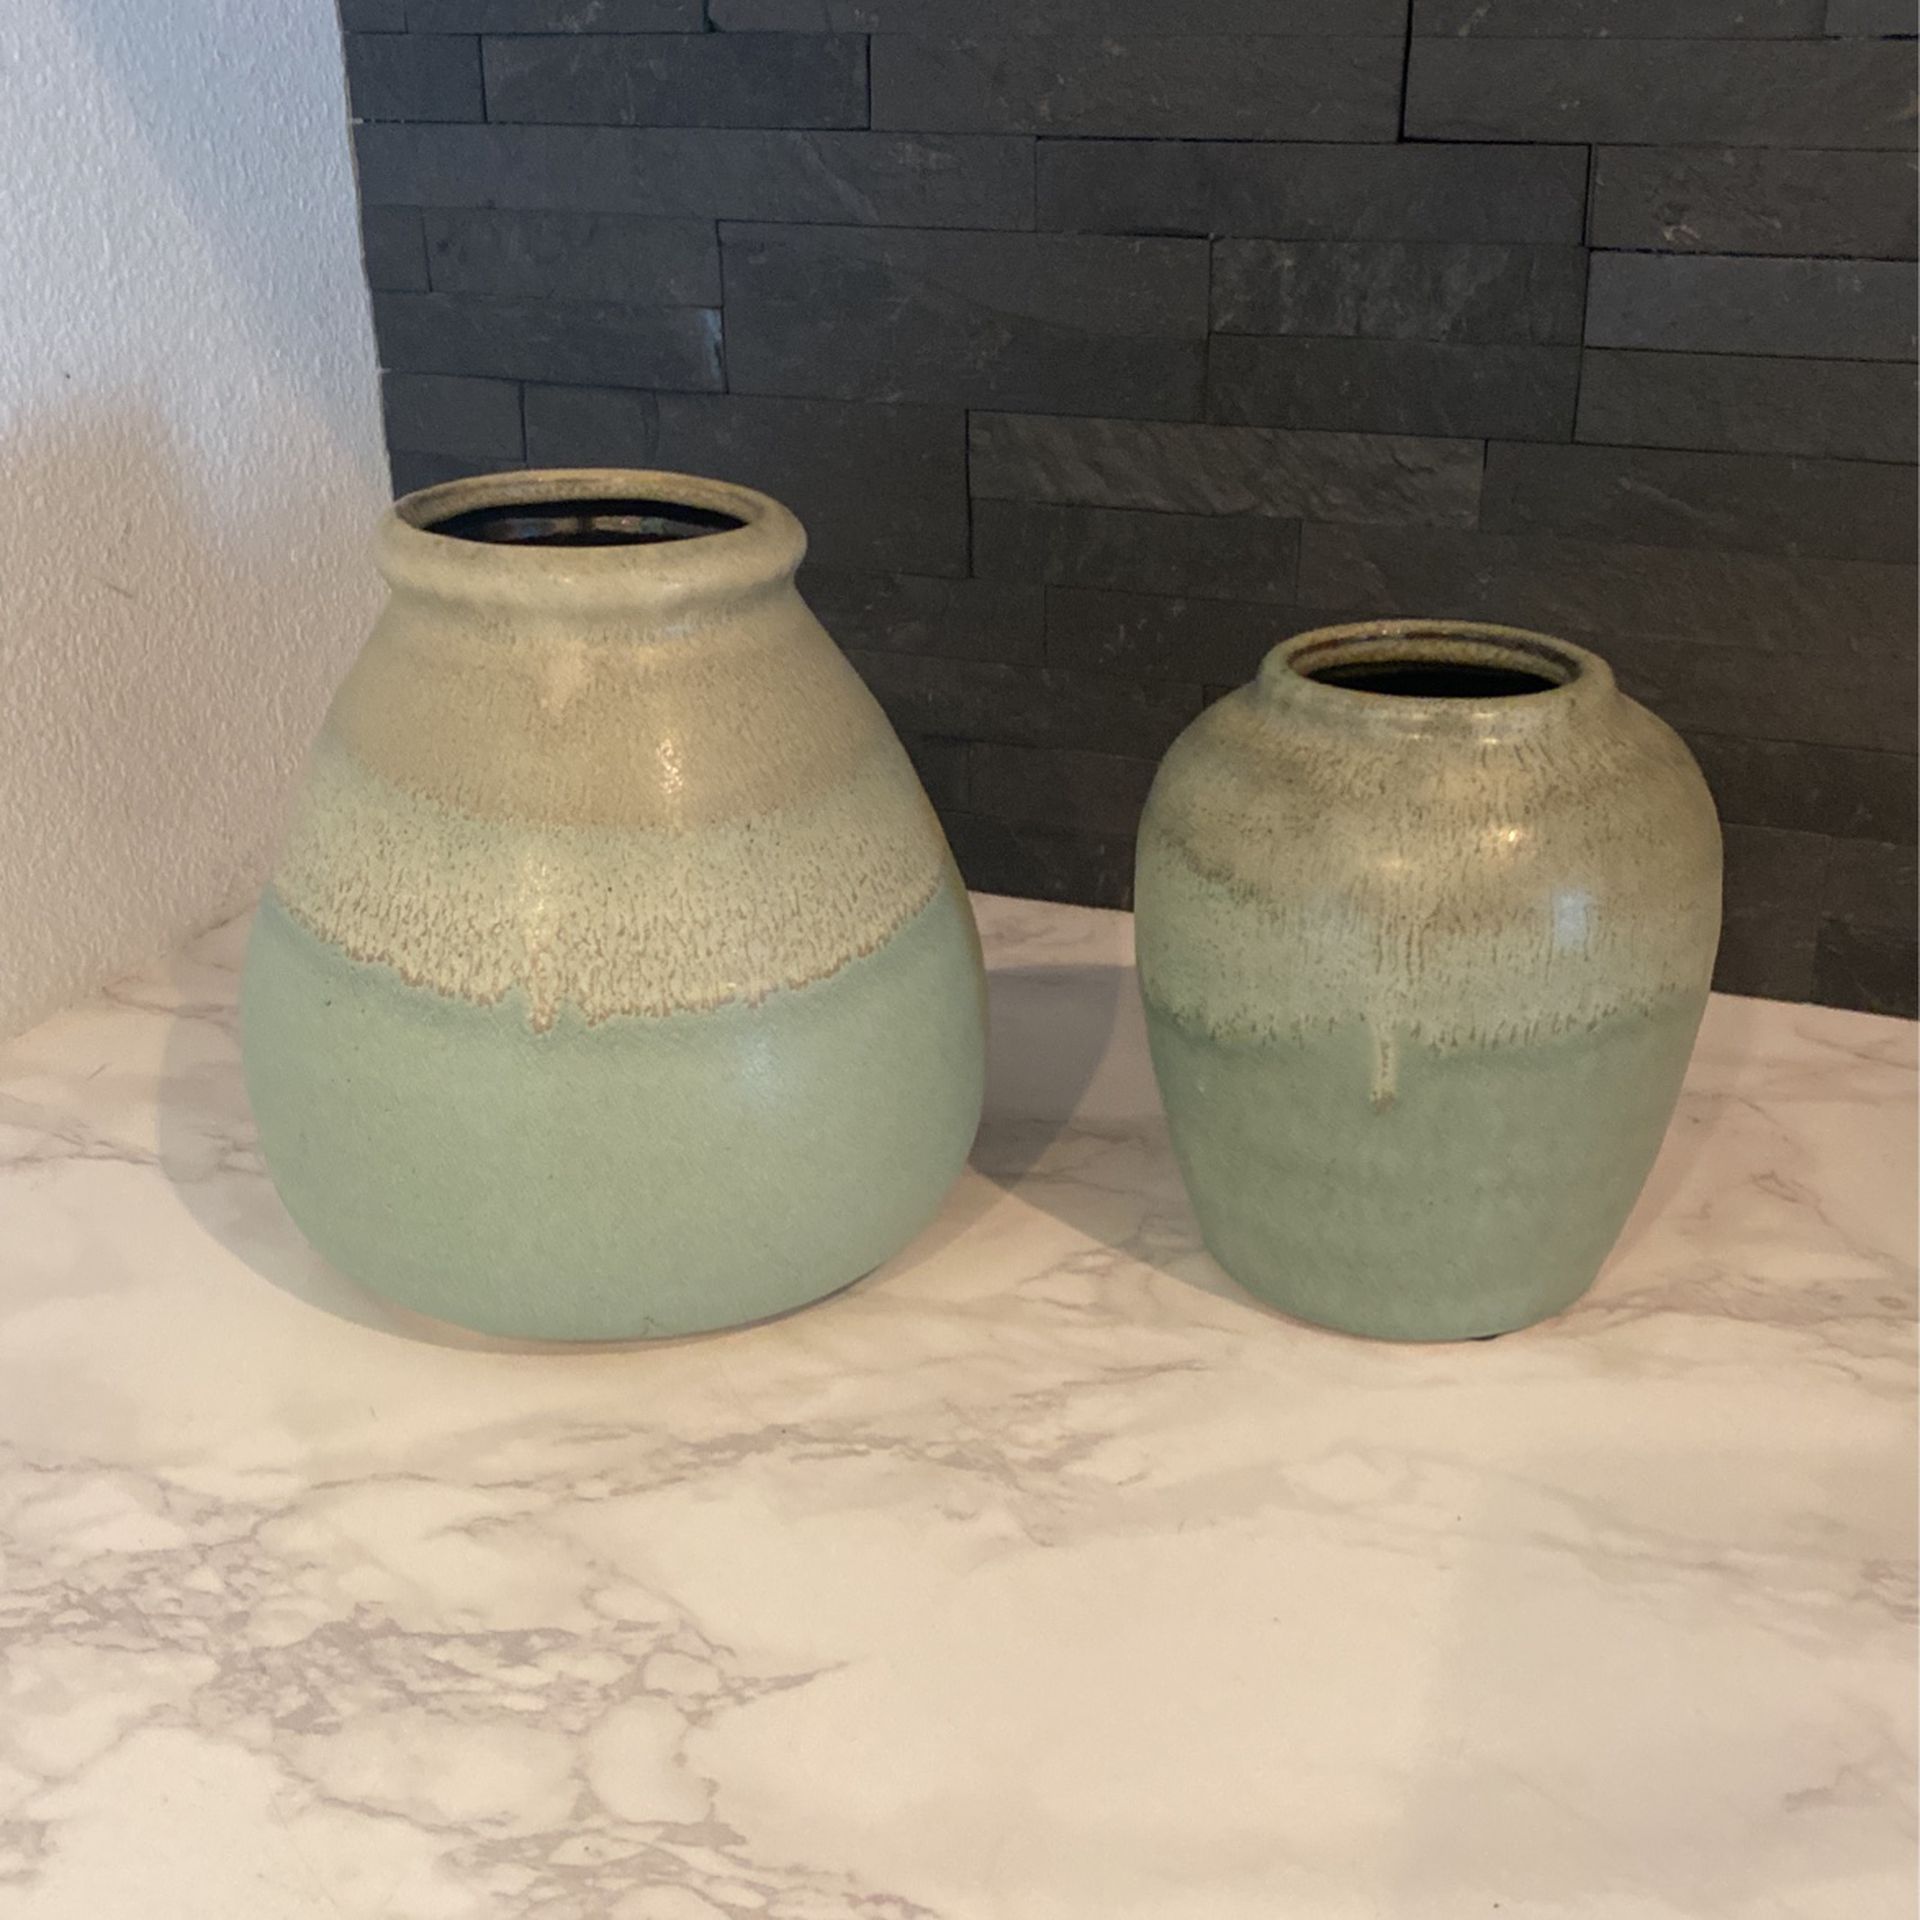 Beautiful Teal Pots Fake Plant Vase Jugs